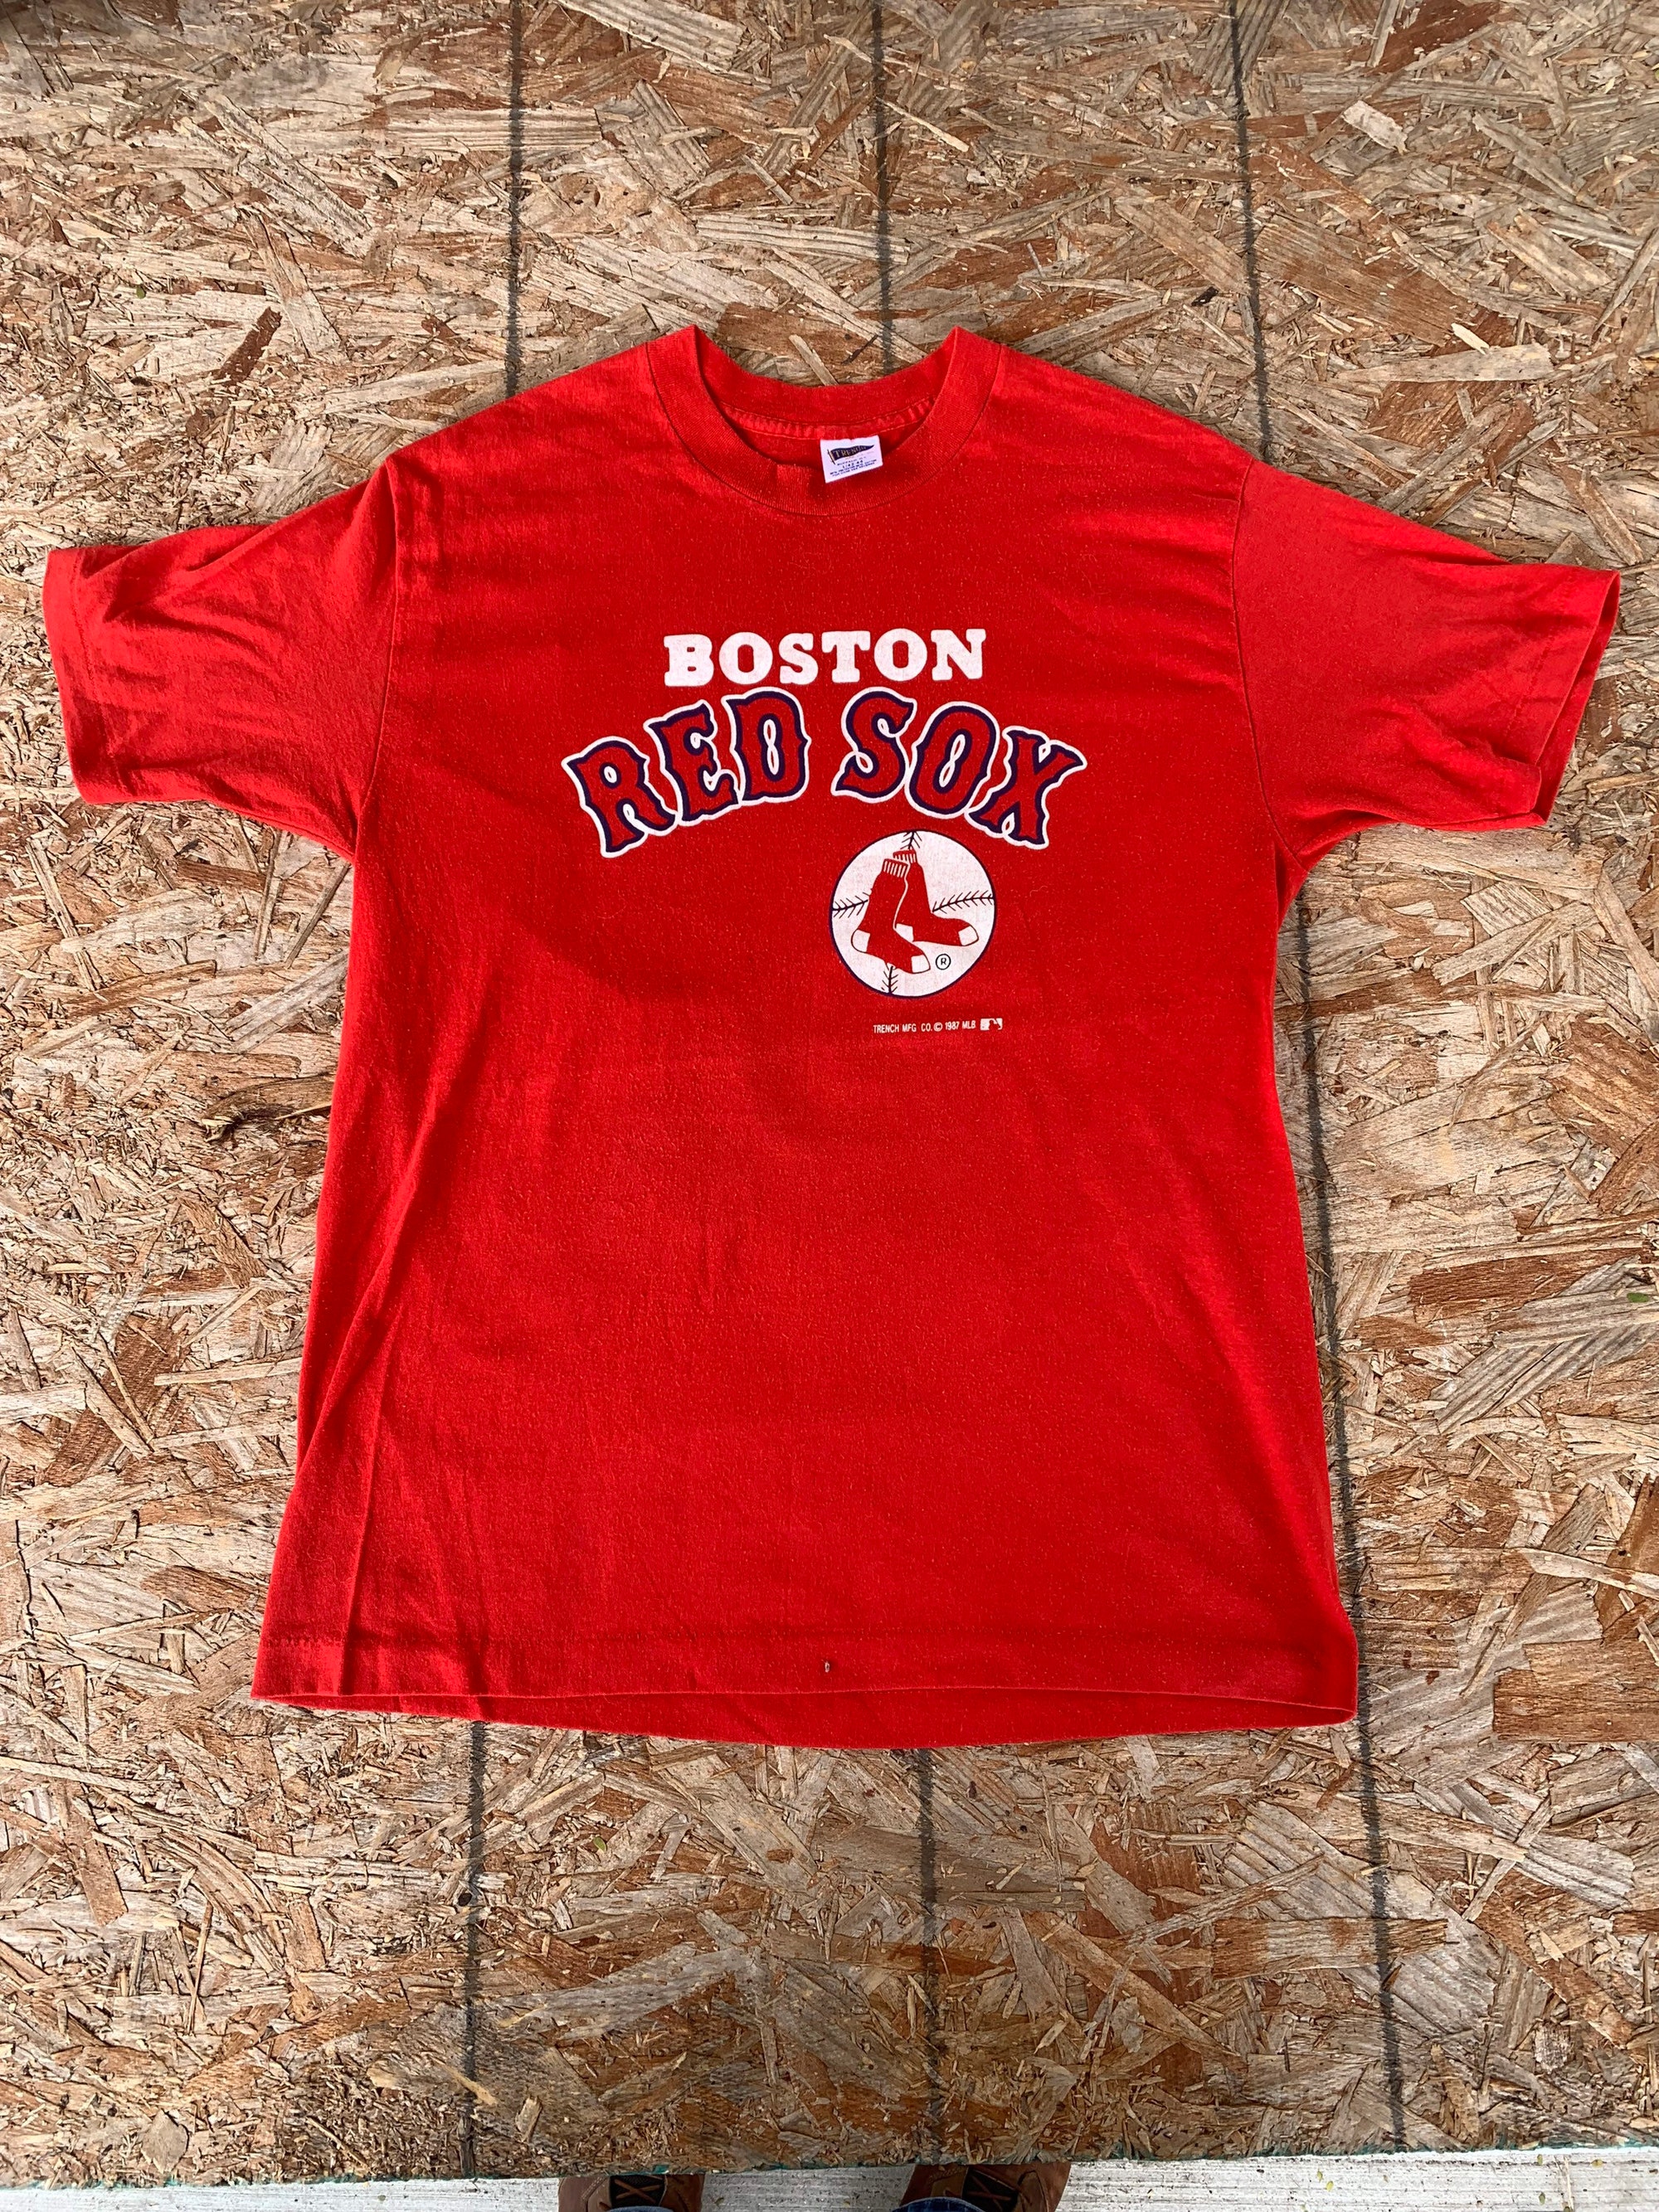 Vintage 1987 Boston Red Sox T-shirt